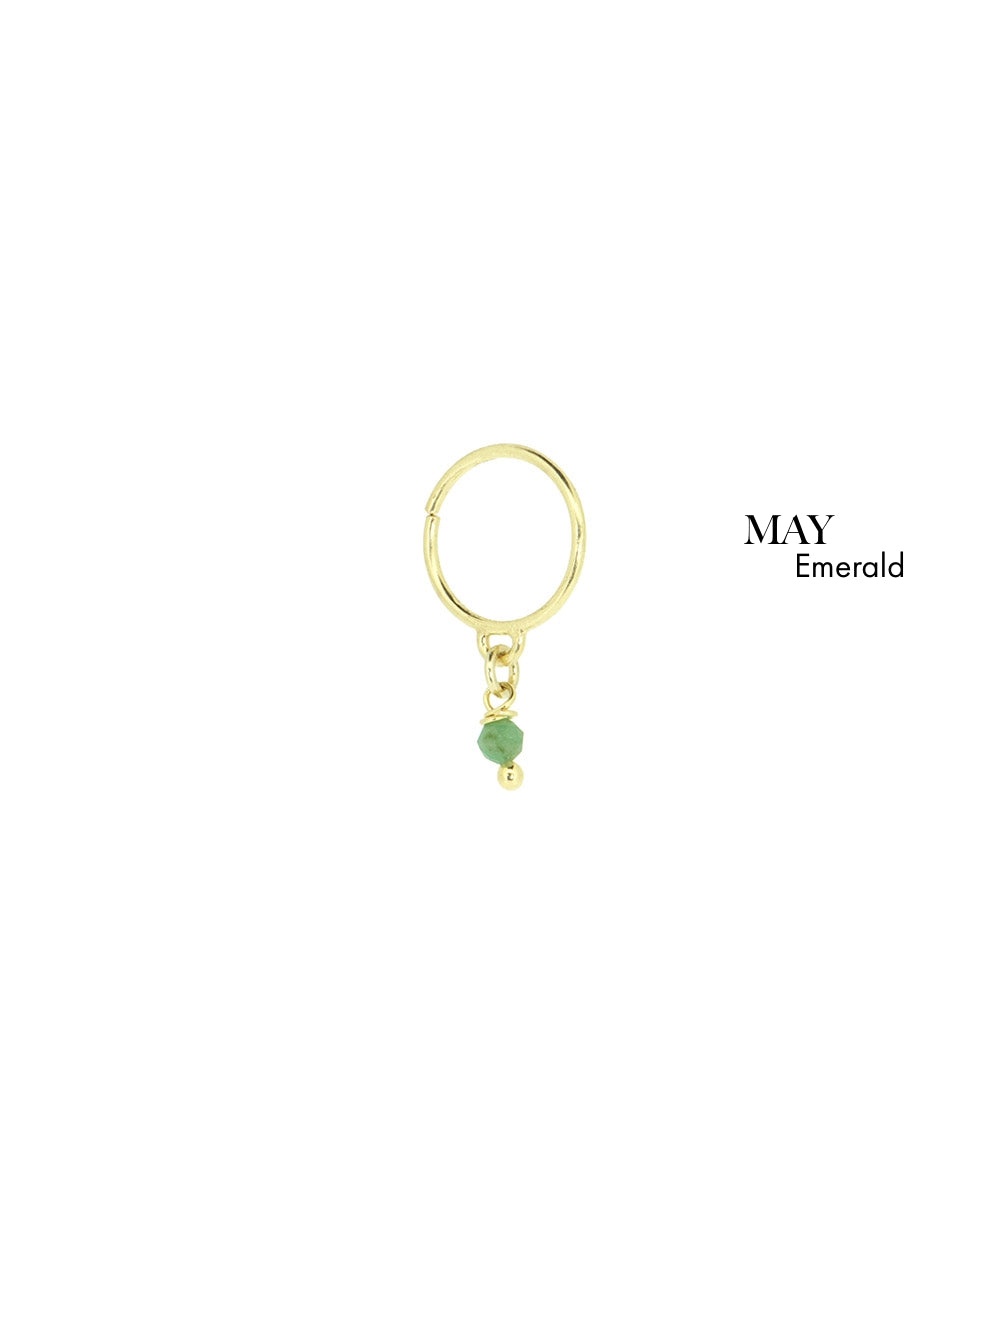 Bestie Birthstone May - Emerald | 14K Gold Plated